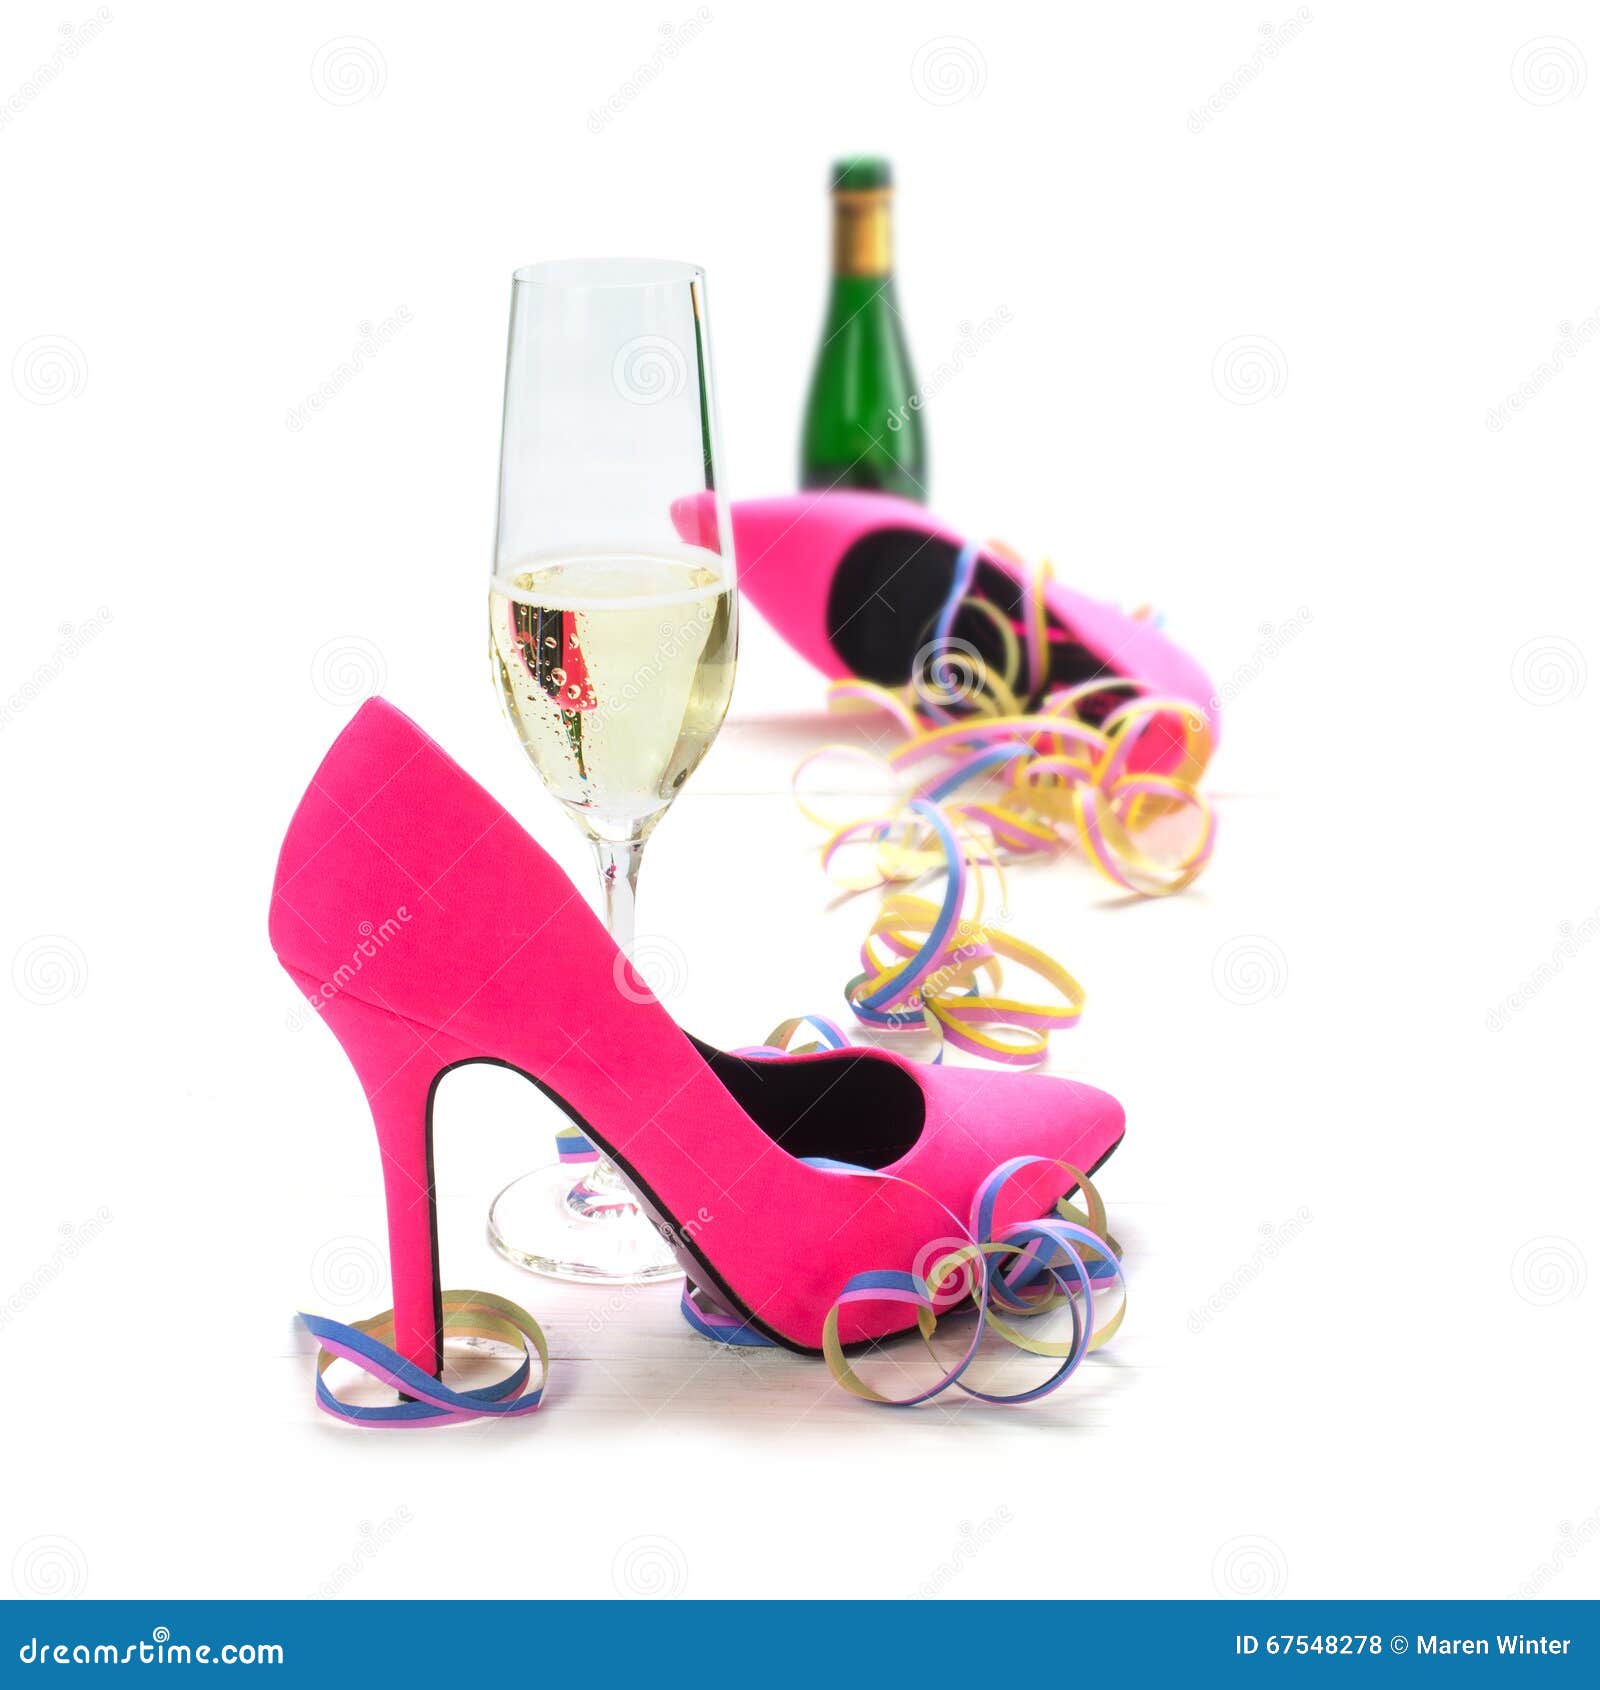 Fashion Women High Heels Sandals Platform Thick Heel Pumps Ladies Party  Shoes | eBay